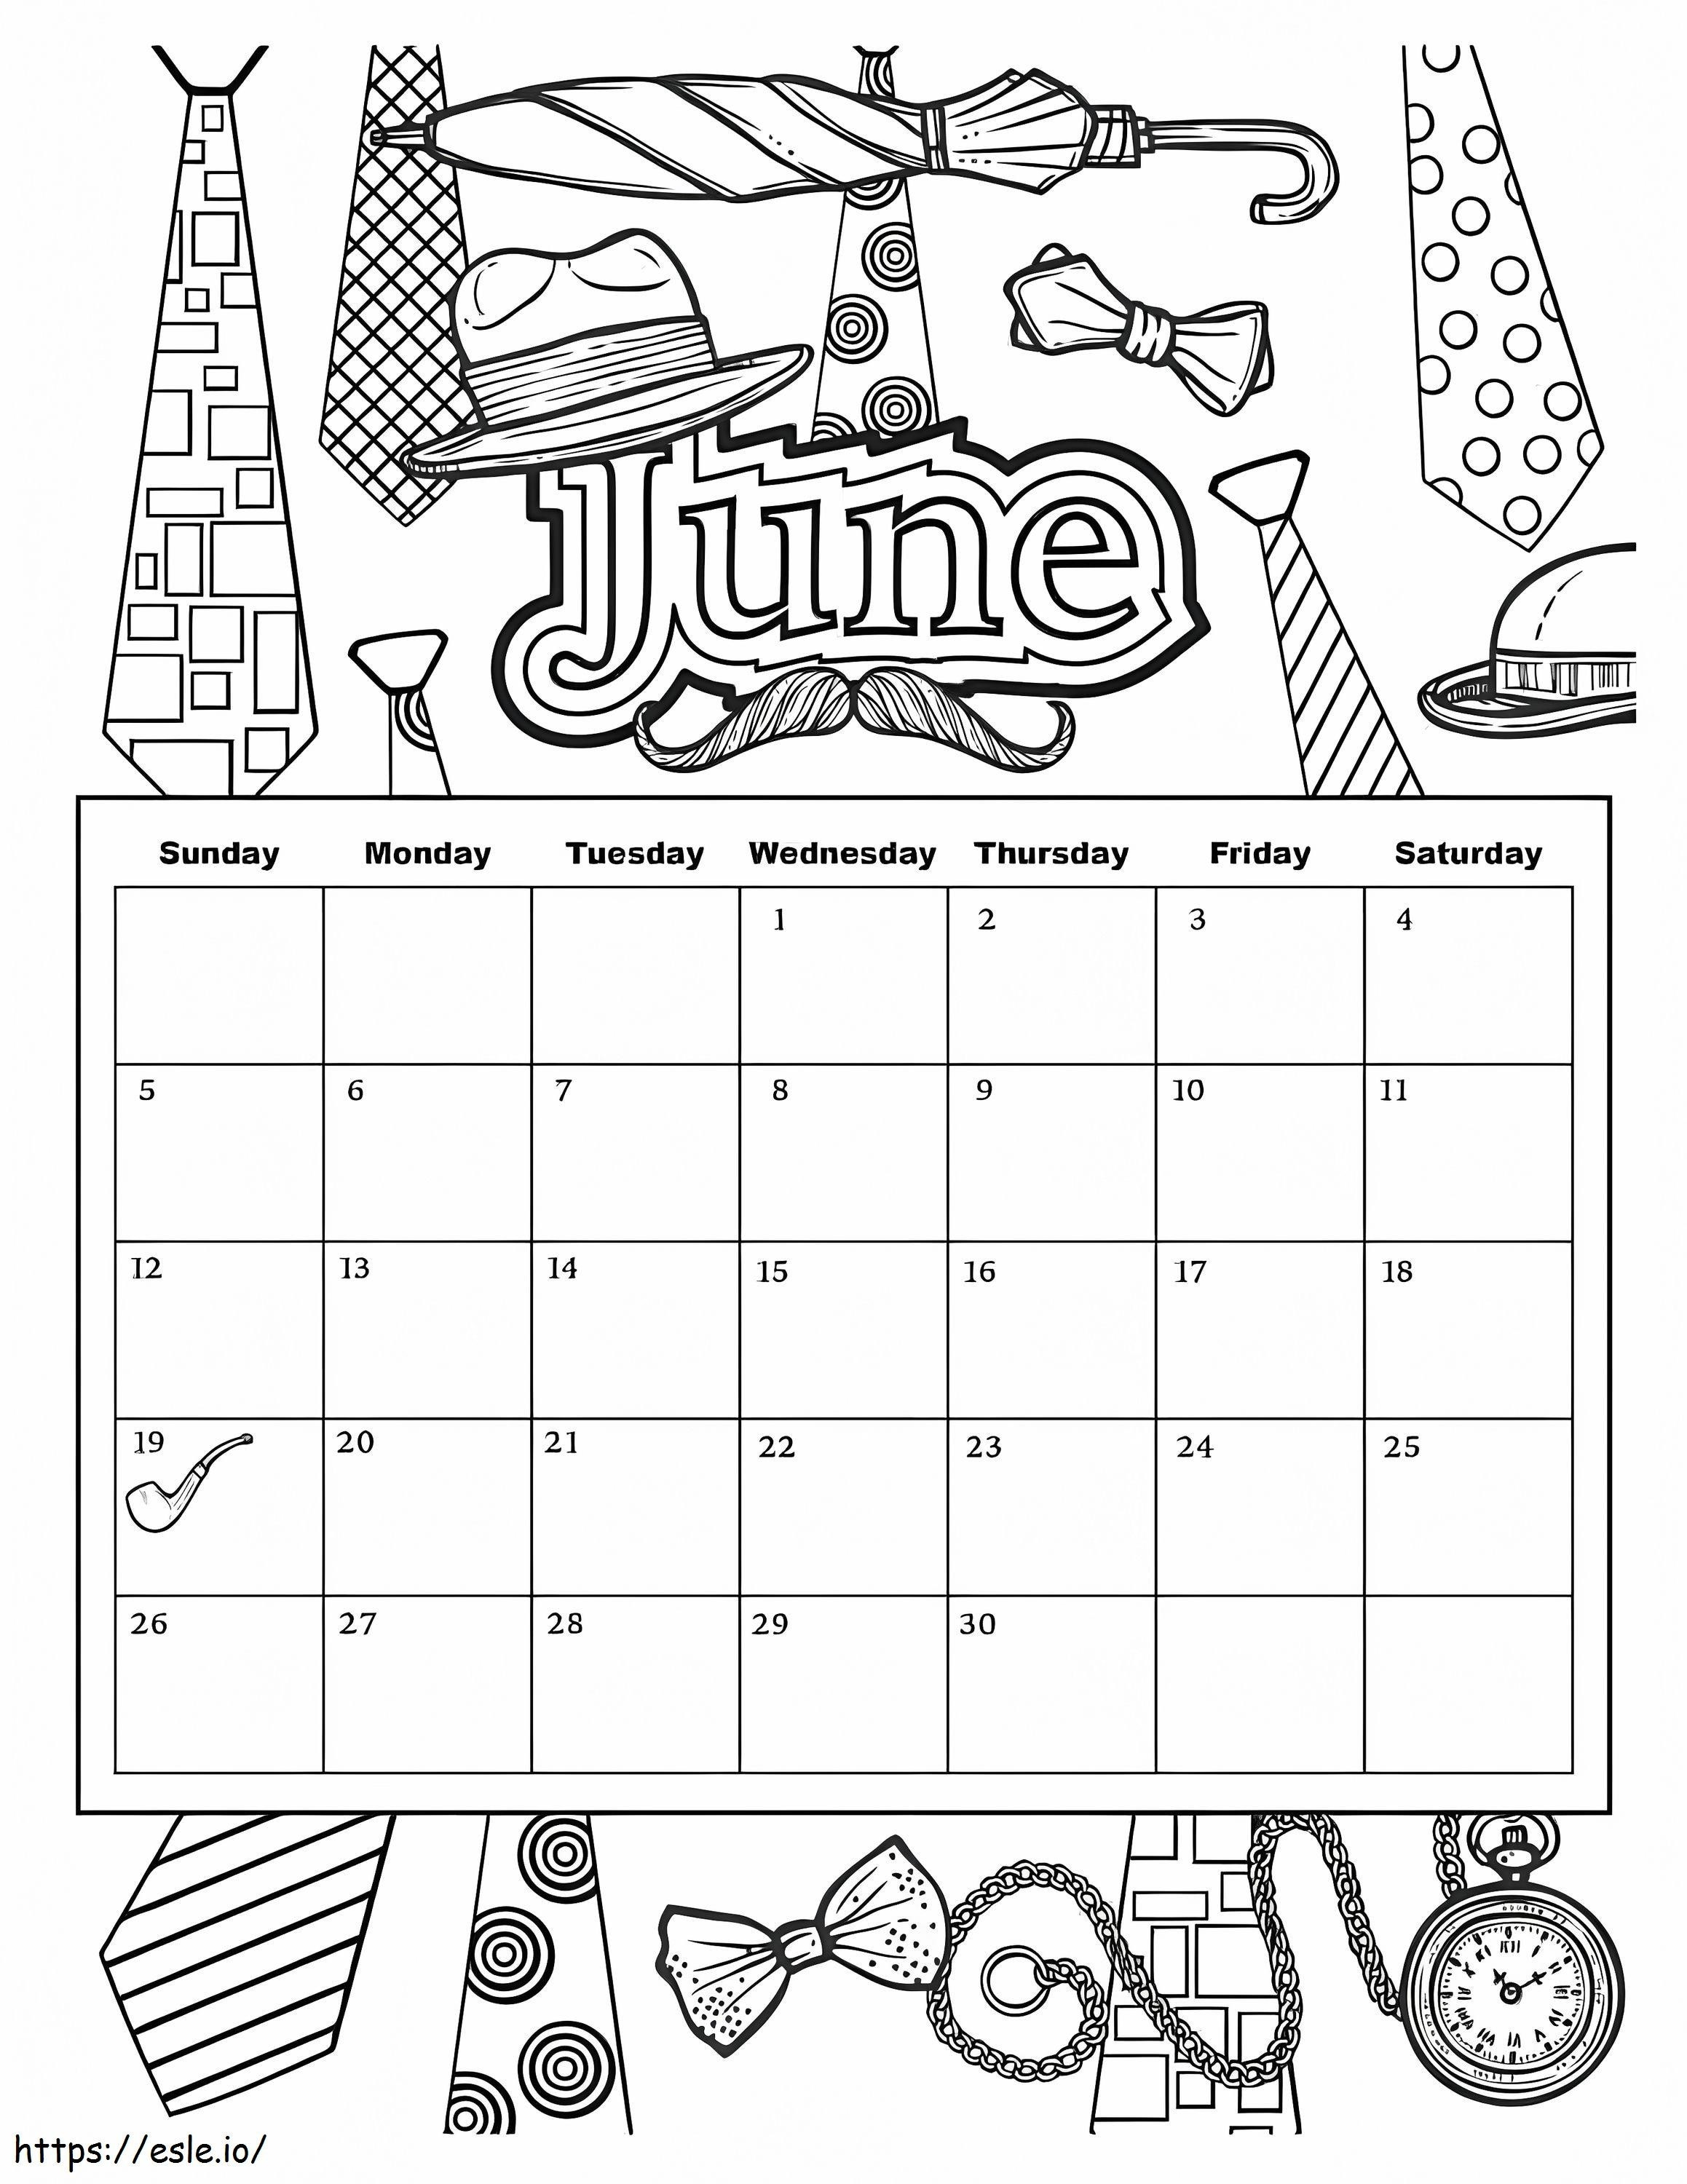 June Calendar coloring page